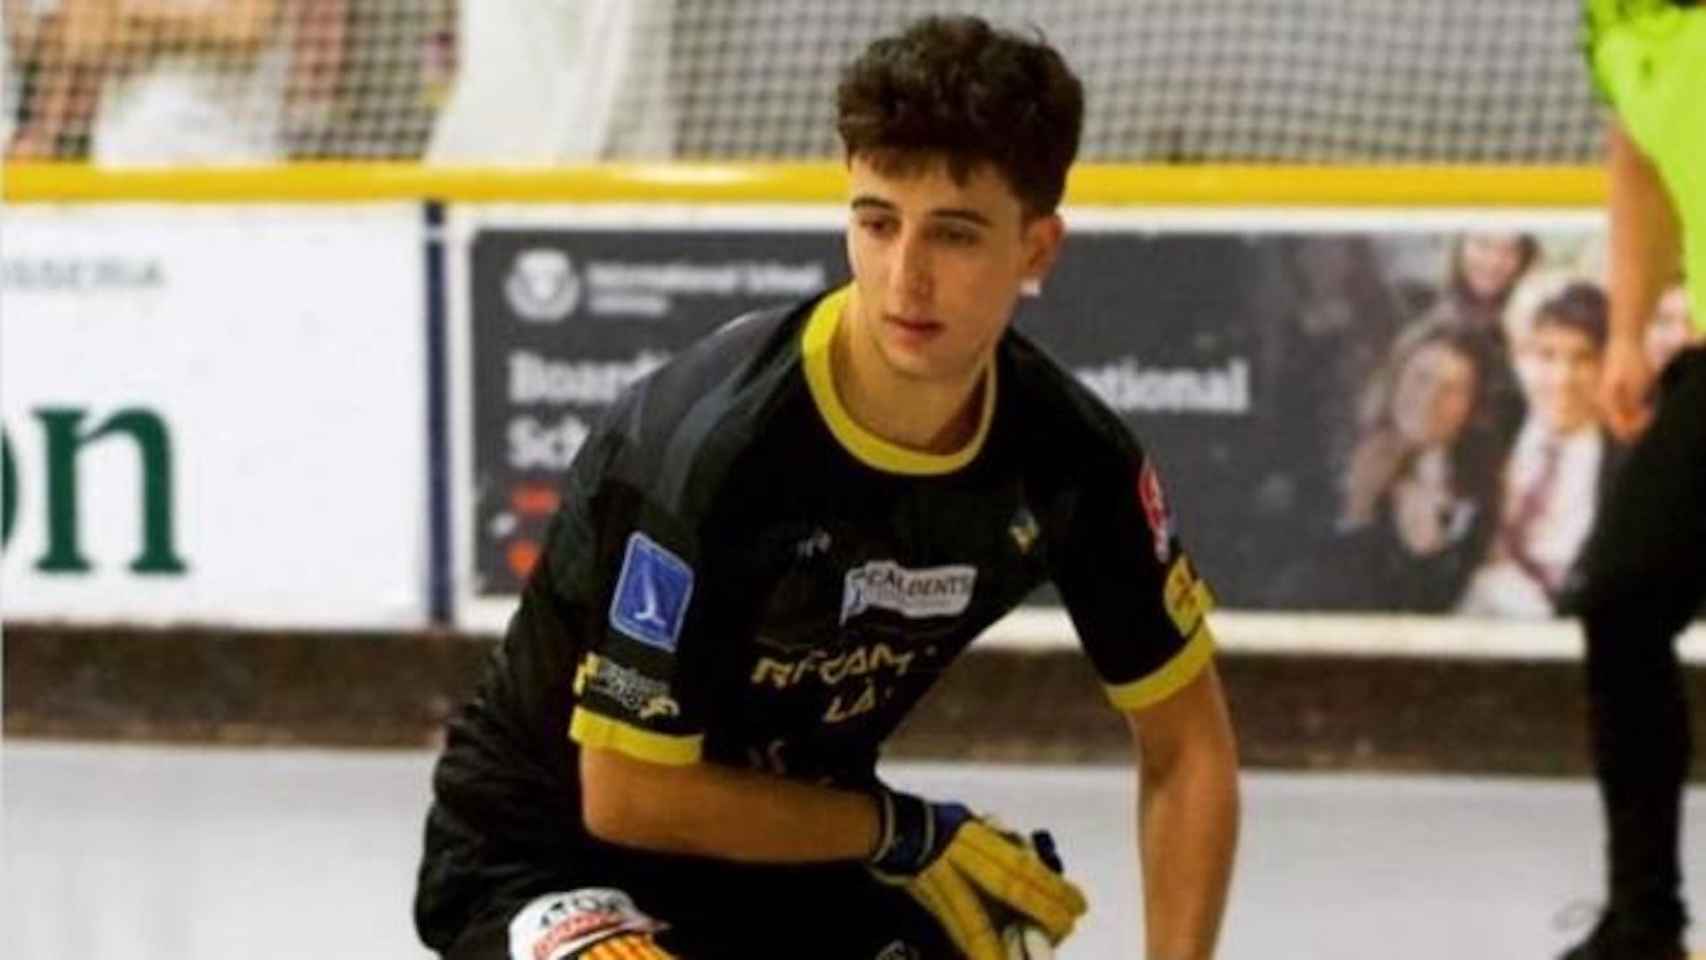 Alexandre Acsensi, el jugador de hockey muerto en un accidente en Palau-solità i Plegamans / REDES SOCIALES